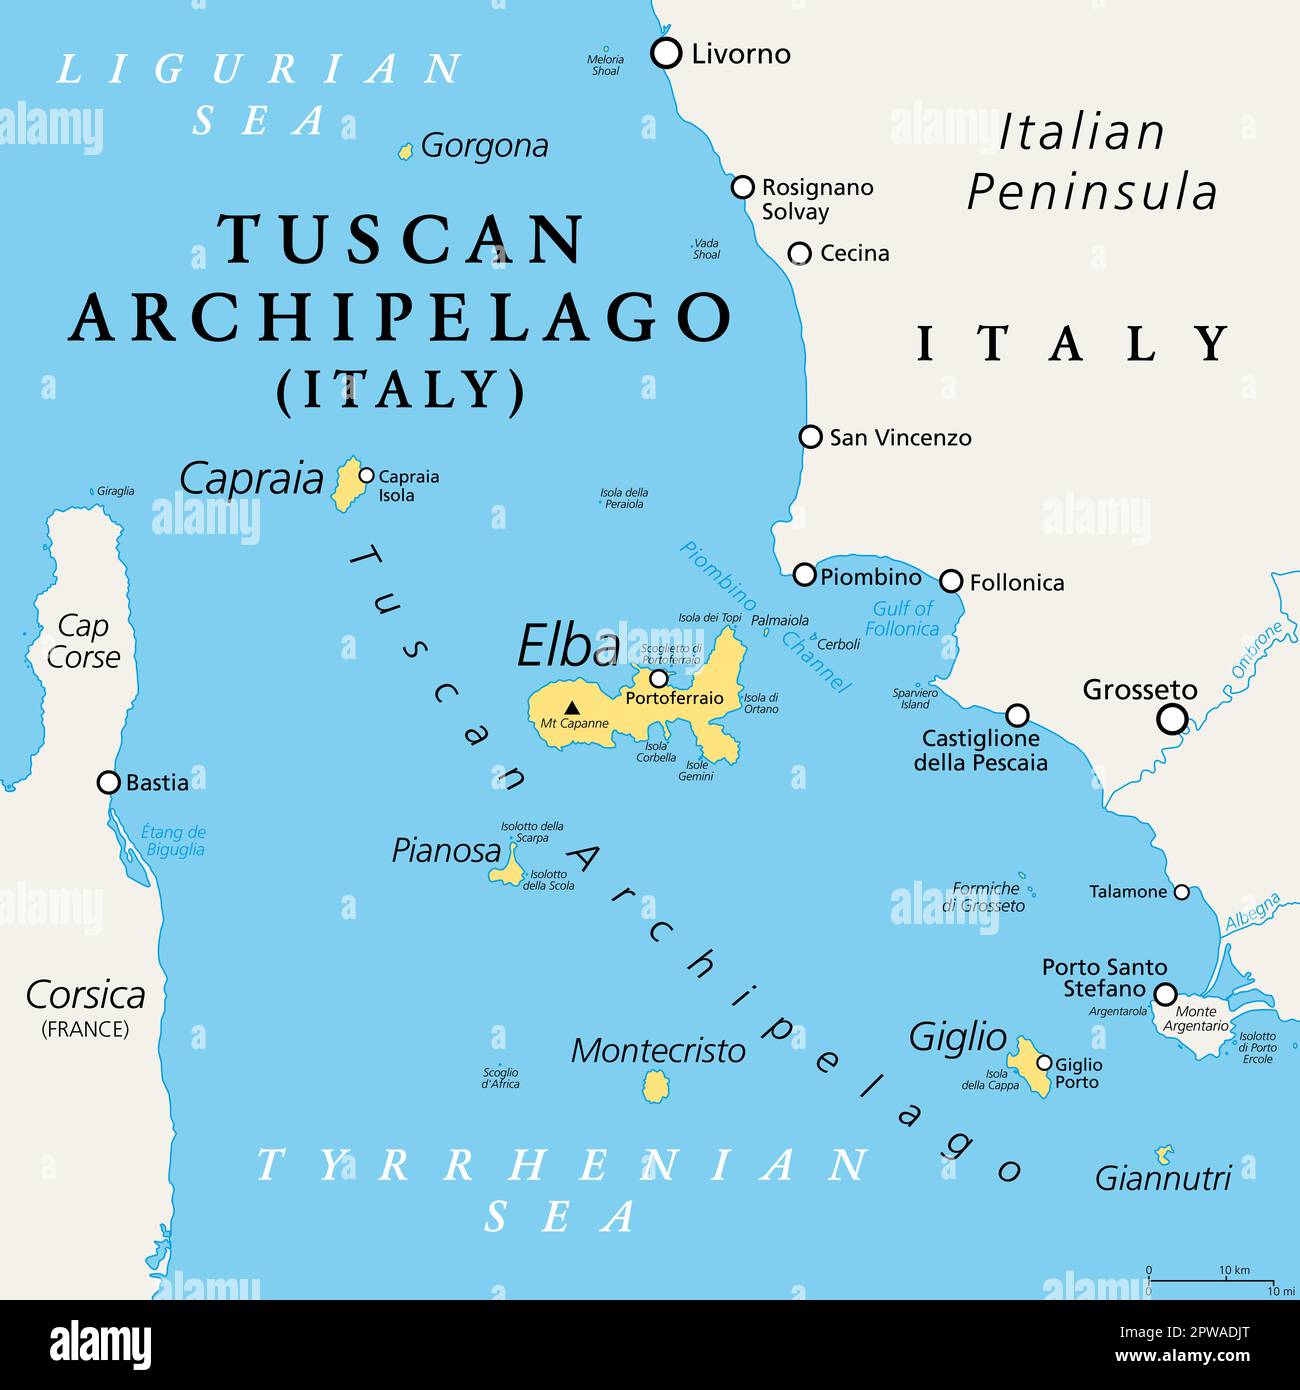 Tuscan Archipelago, Italy, political map. Chain of islands between Ligurian and Tyrrhenian Sea, west of Tuscany, between Corsica and Italian Peninsula. Stock Photo